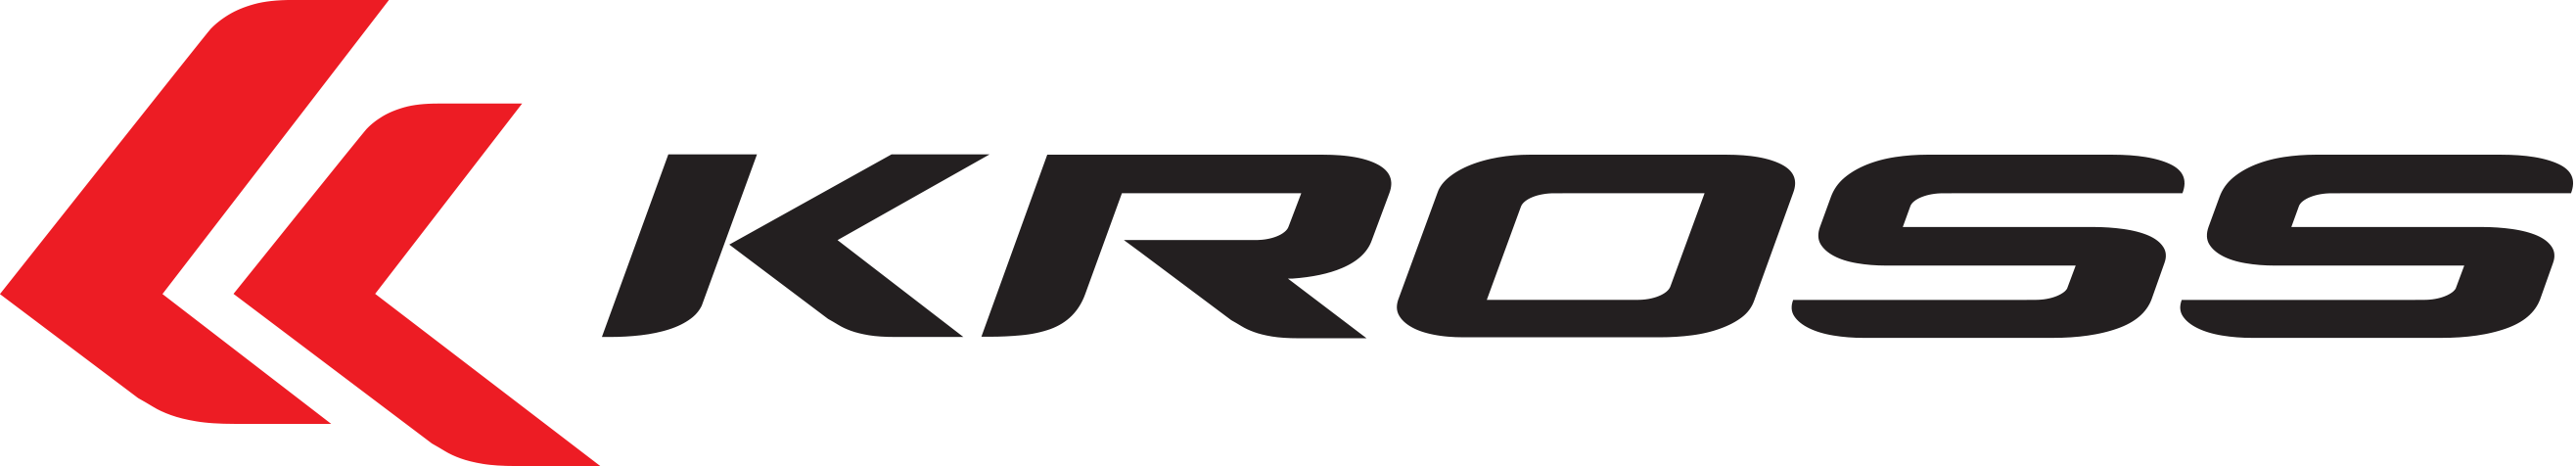 Marka rowerowa Kross – logo